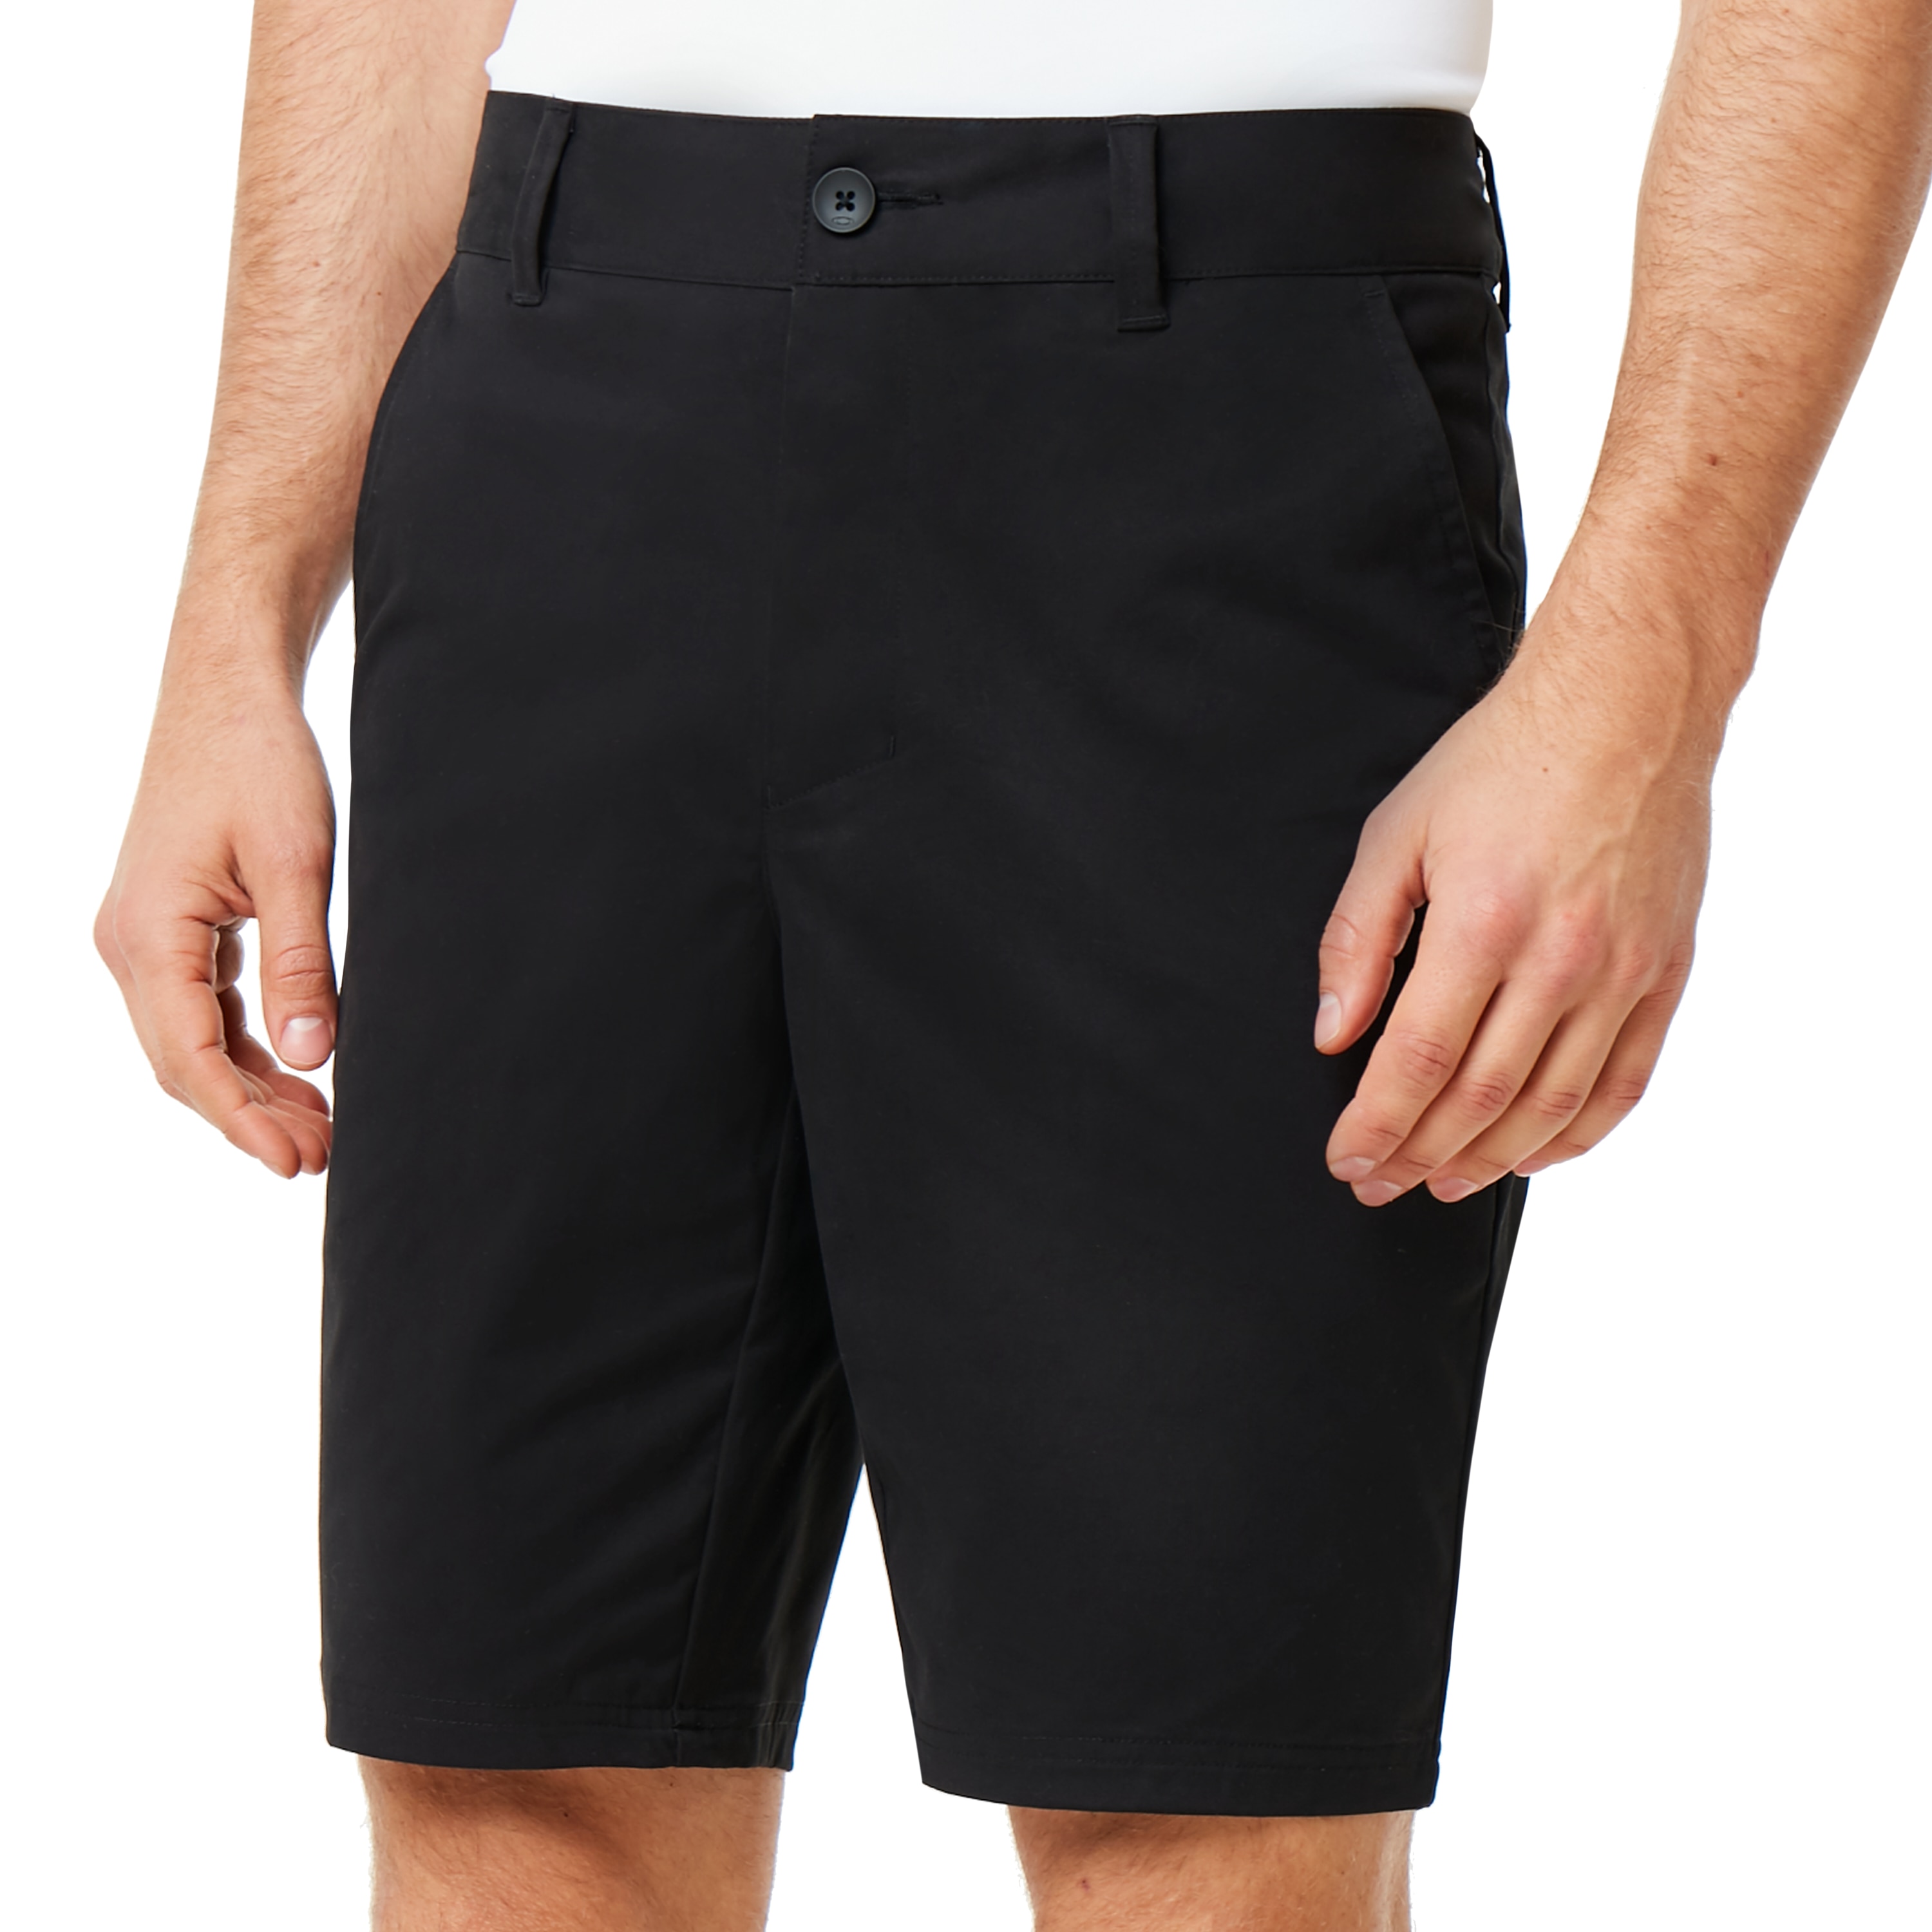 oakley shorts australia